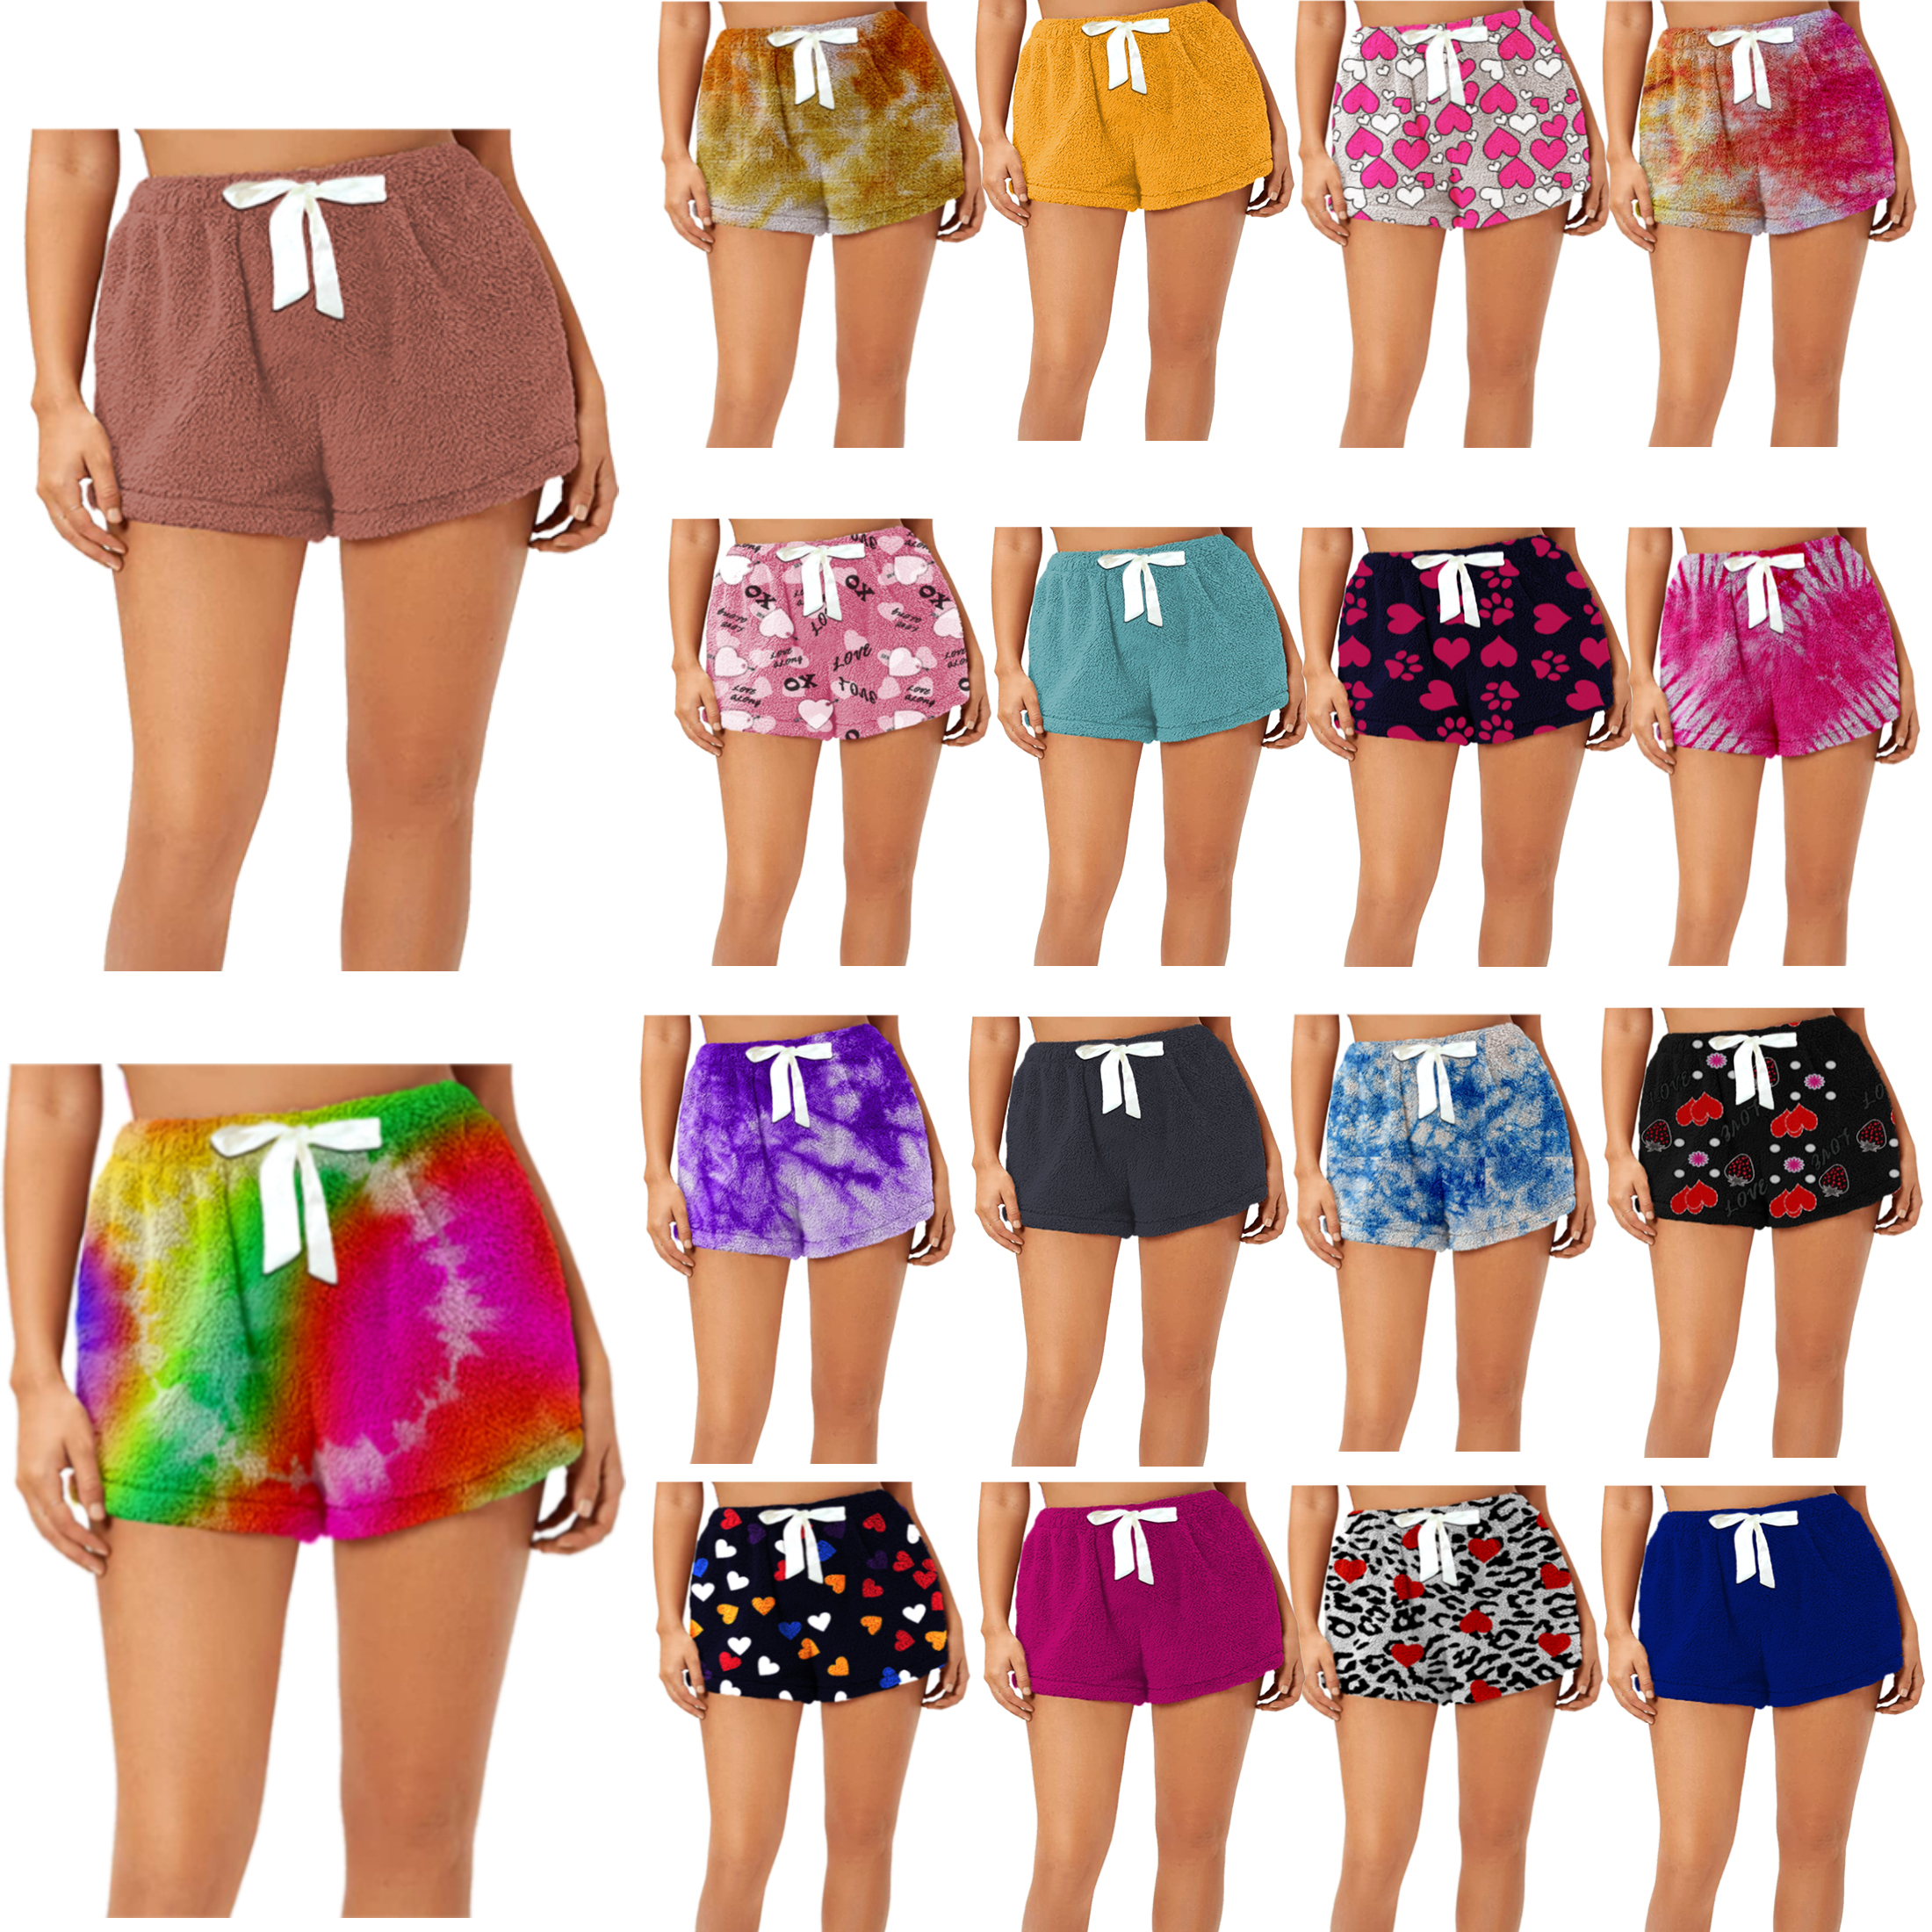 2-Pack: Women's Super Soft Micro Fleece Ultra Plush Pajama Shorts - Tie-dye, Small